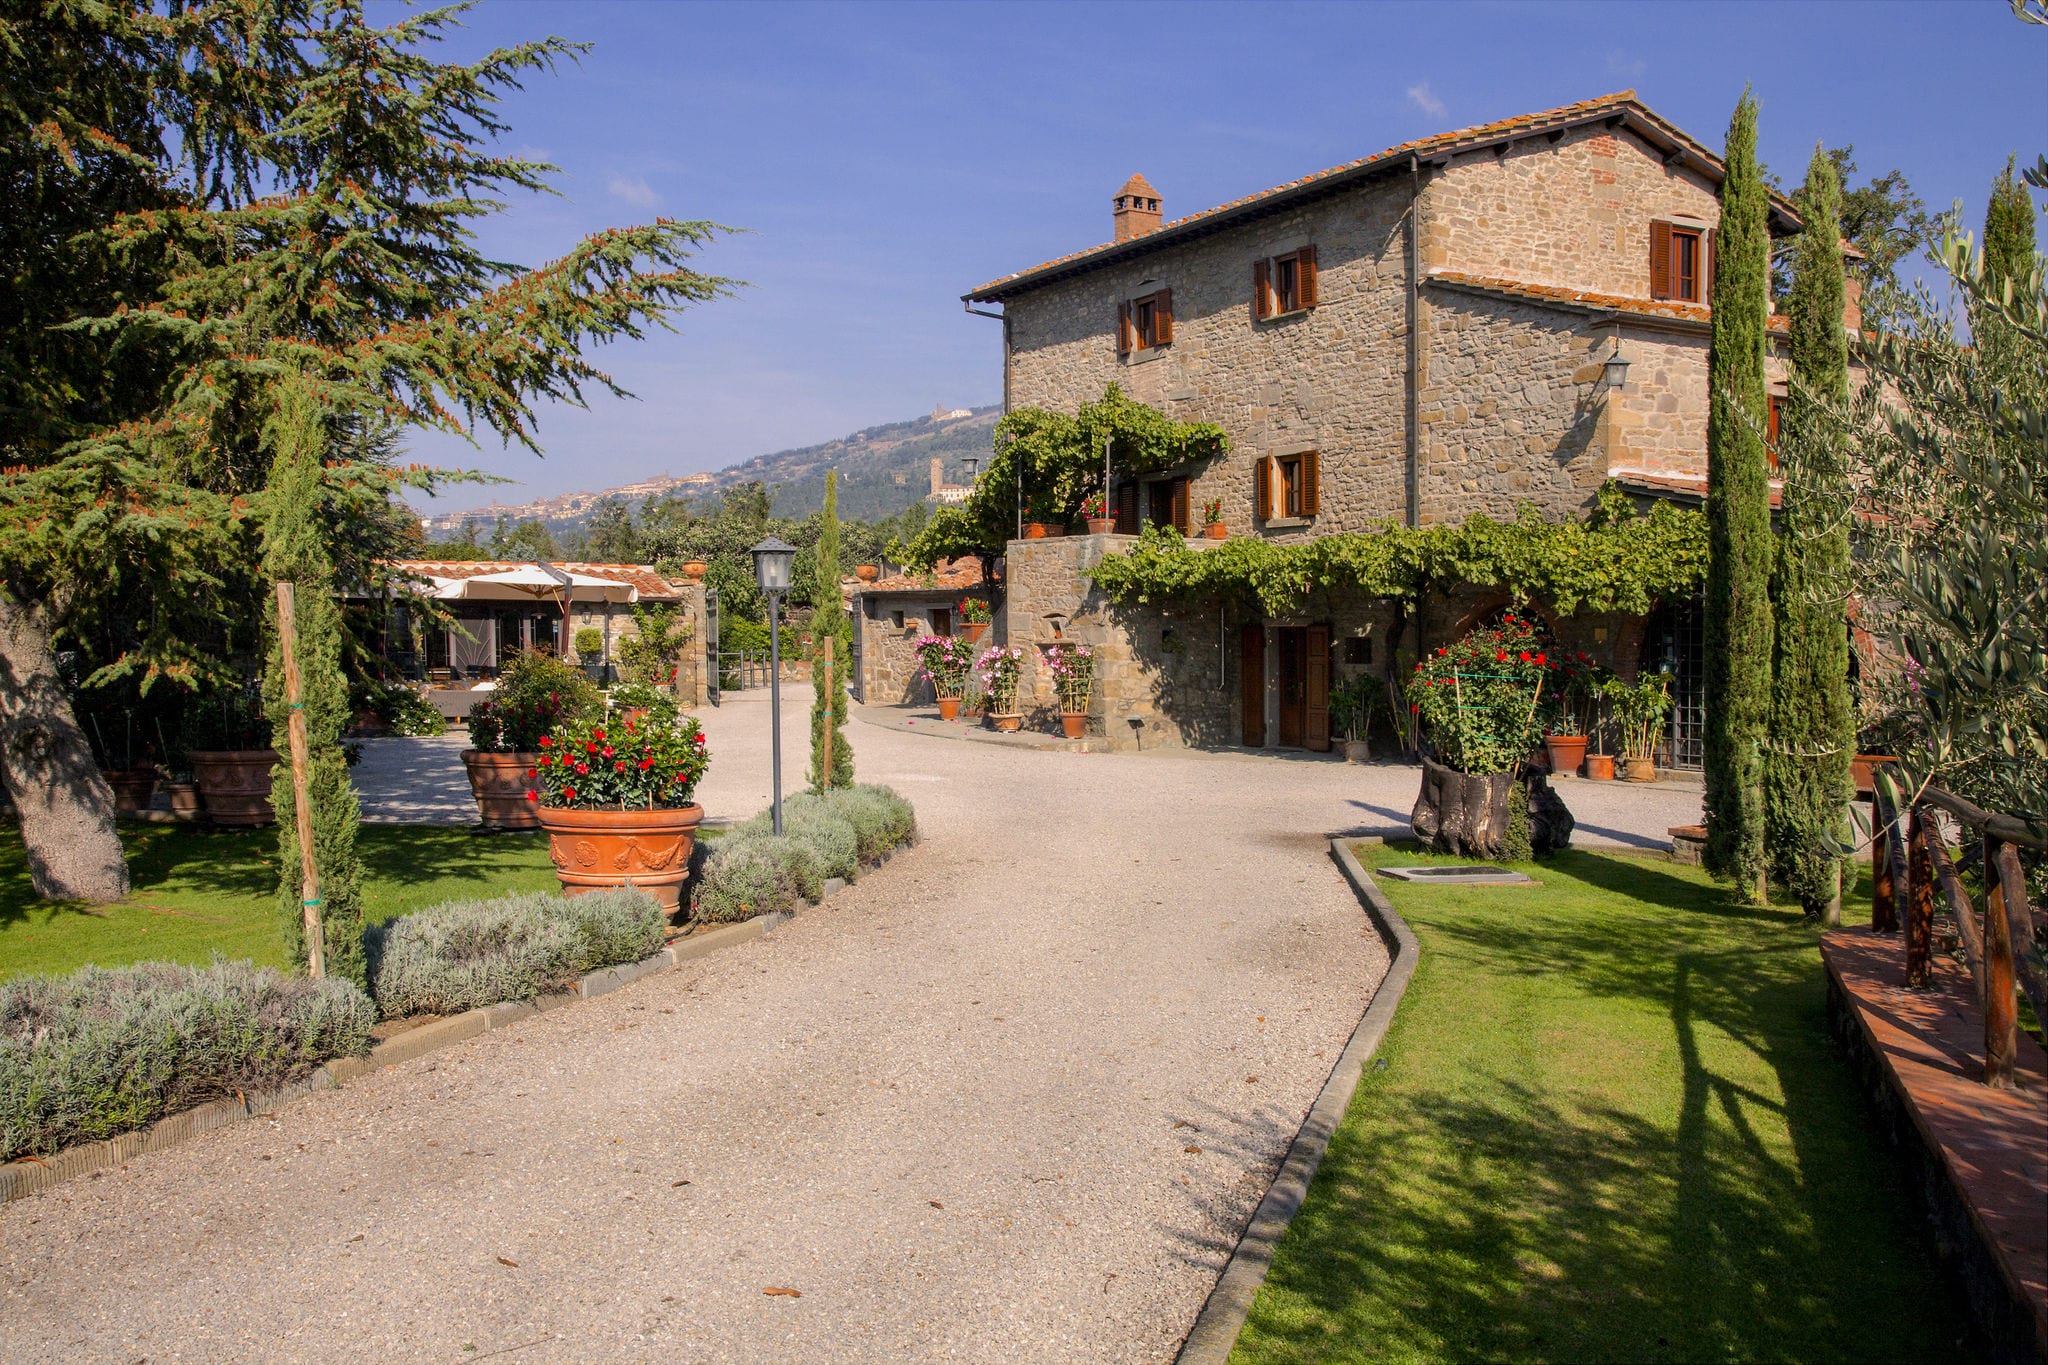 Agriturismo near Cortona with spacious garden and swimming pool